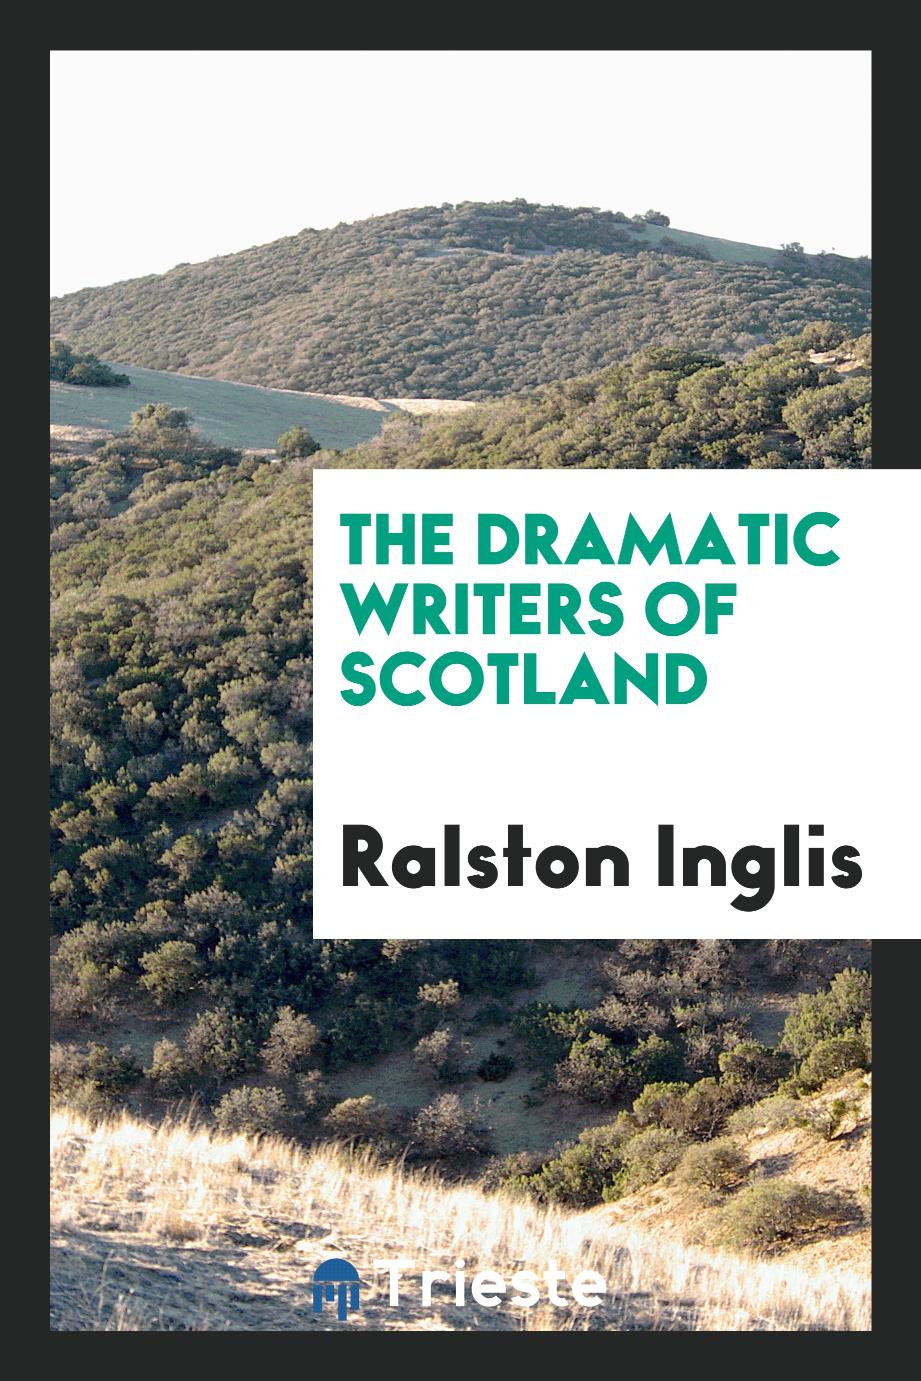 Ralston Inglis - The Dramatic Writers of Scotland